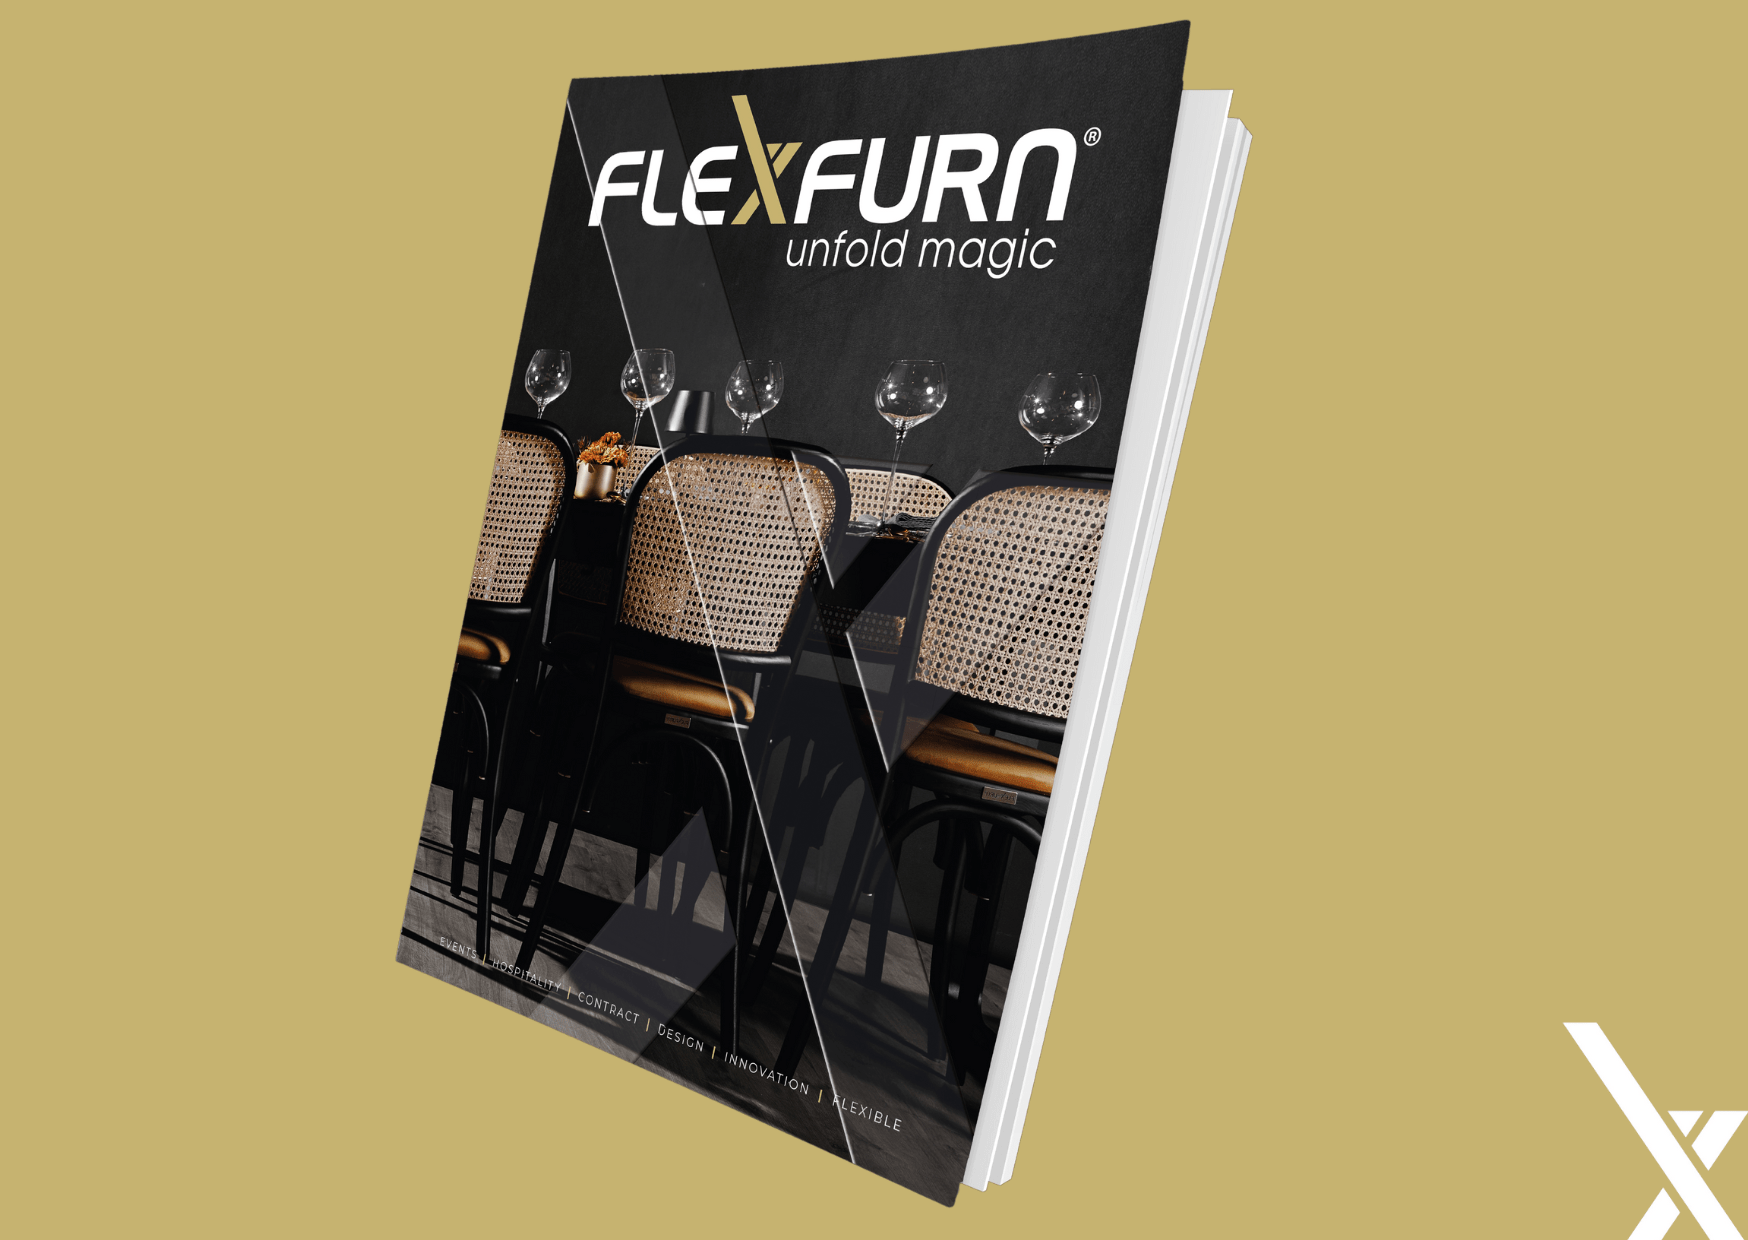 A breath of fresh air: discover Flexfurn's new style!